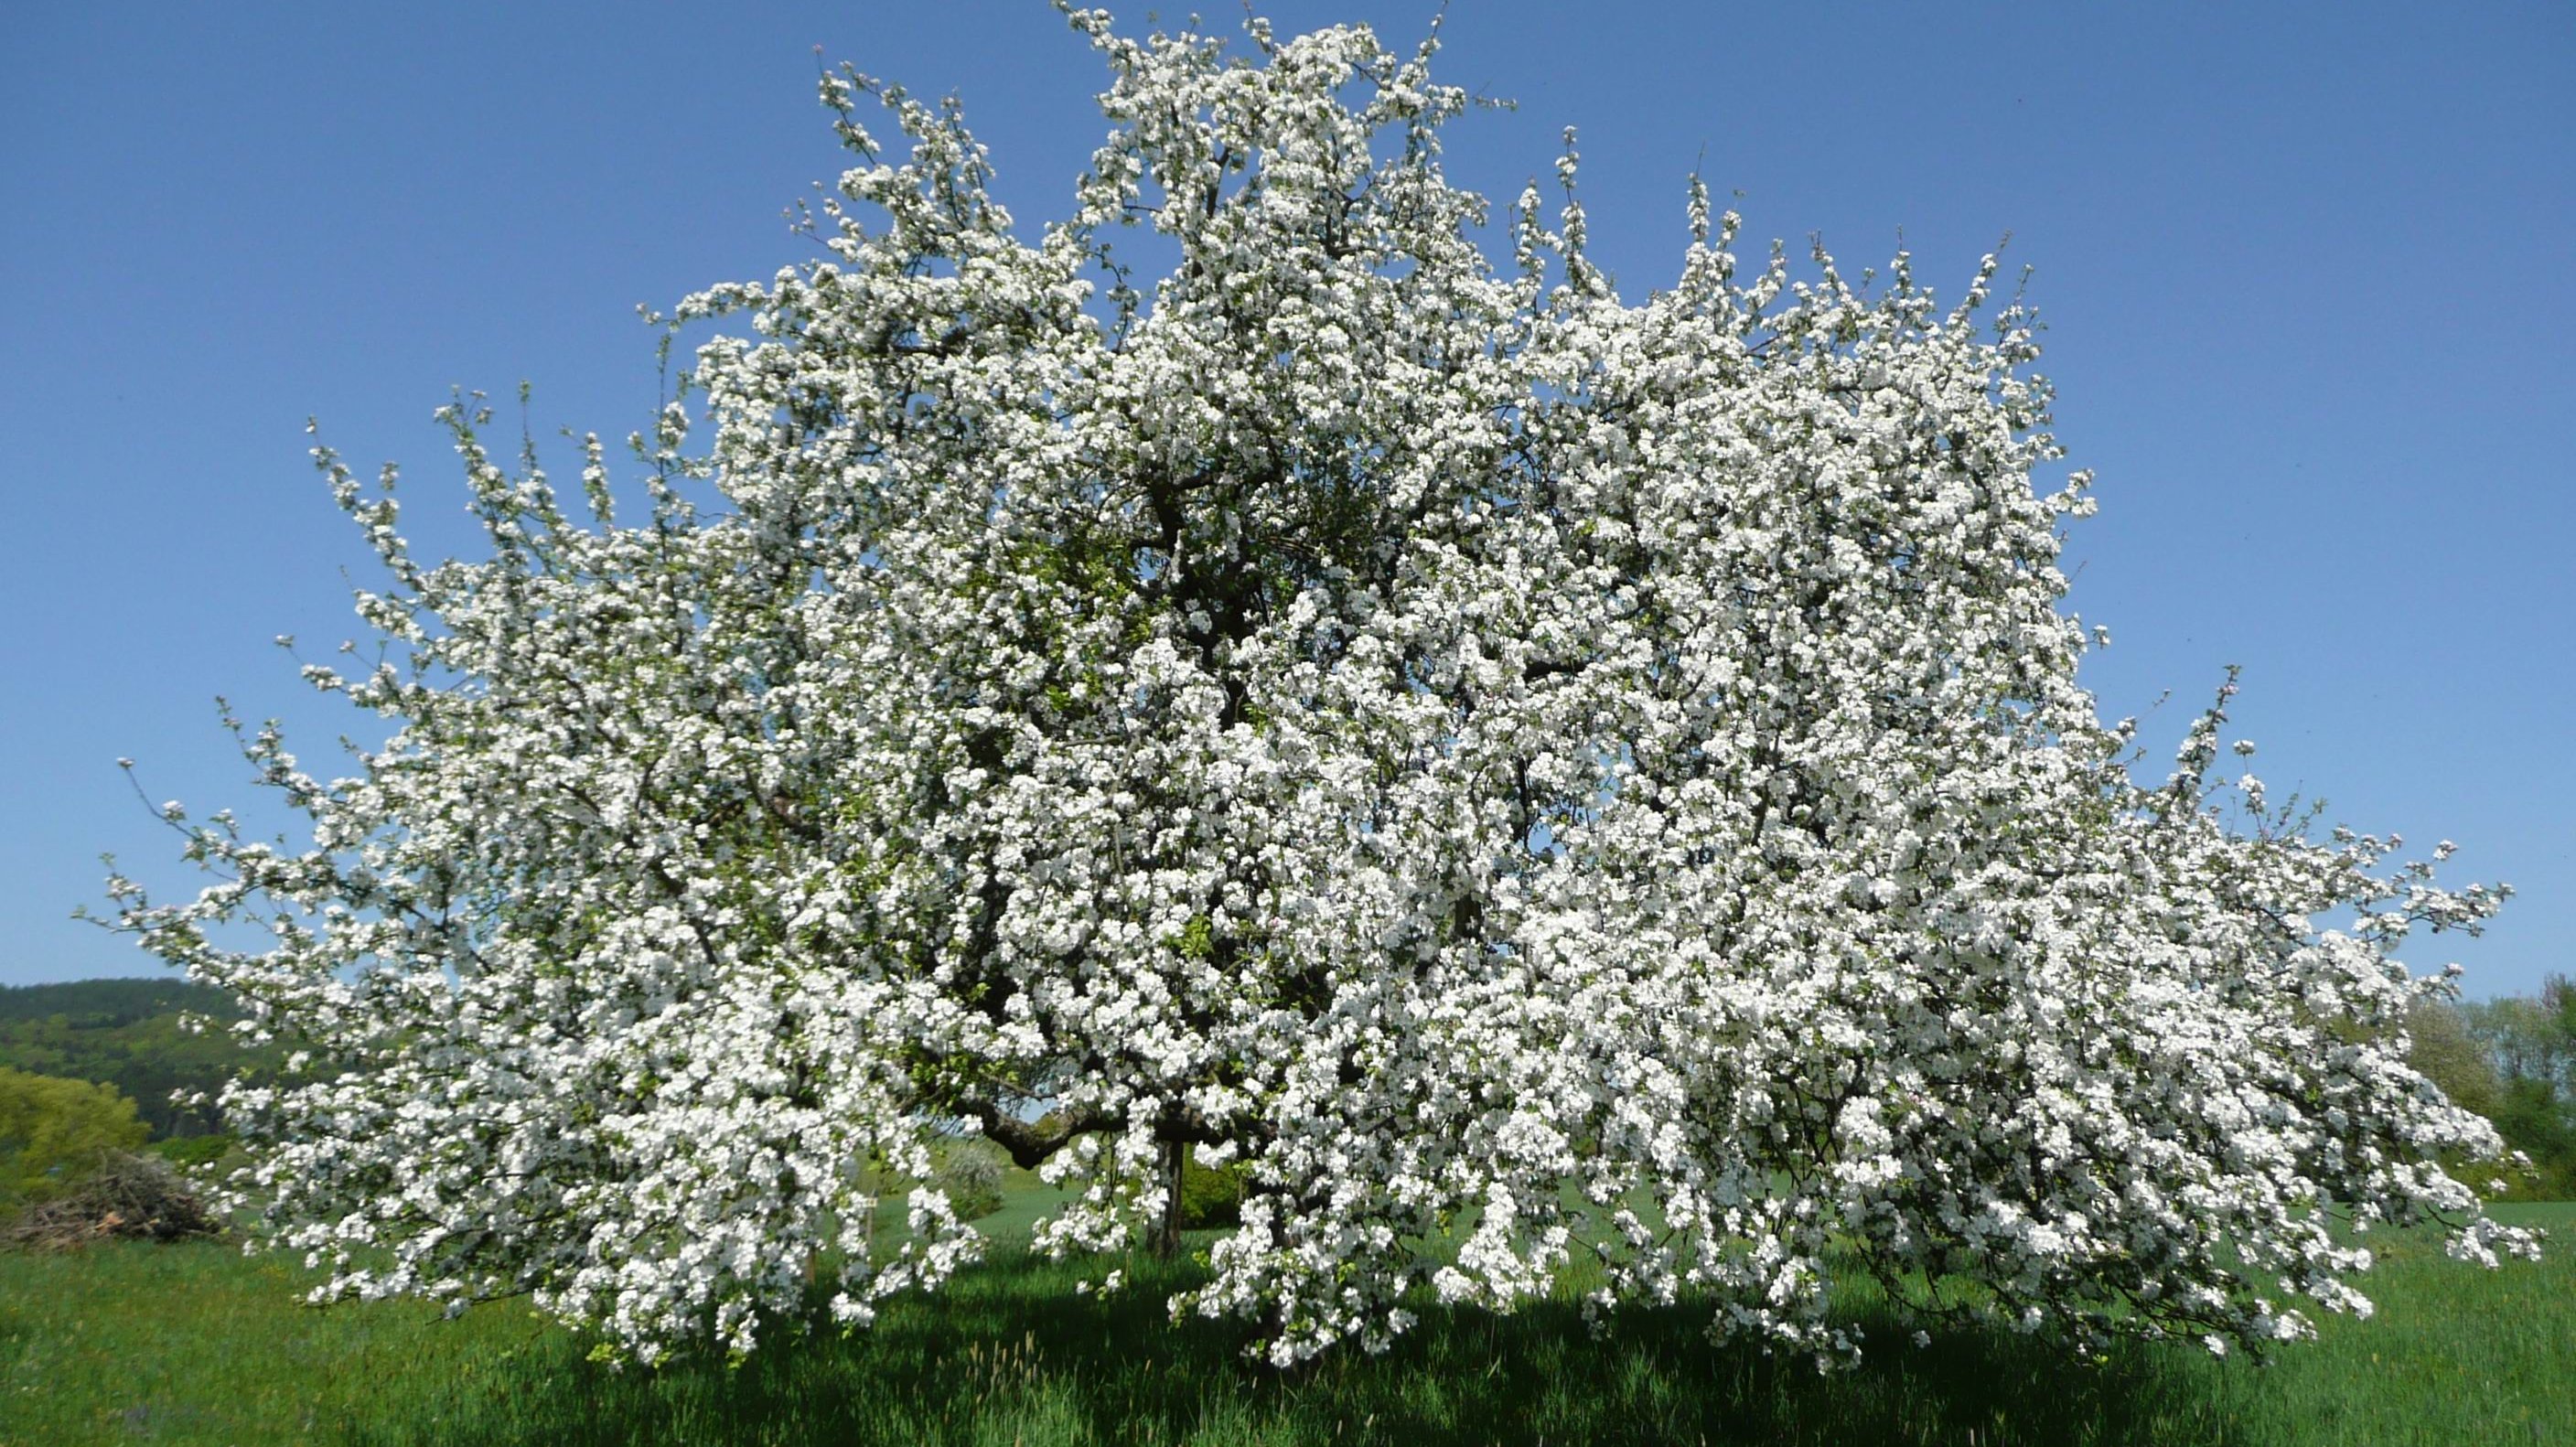 Streuobstbaum